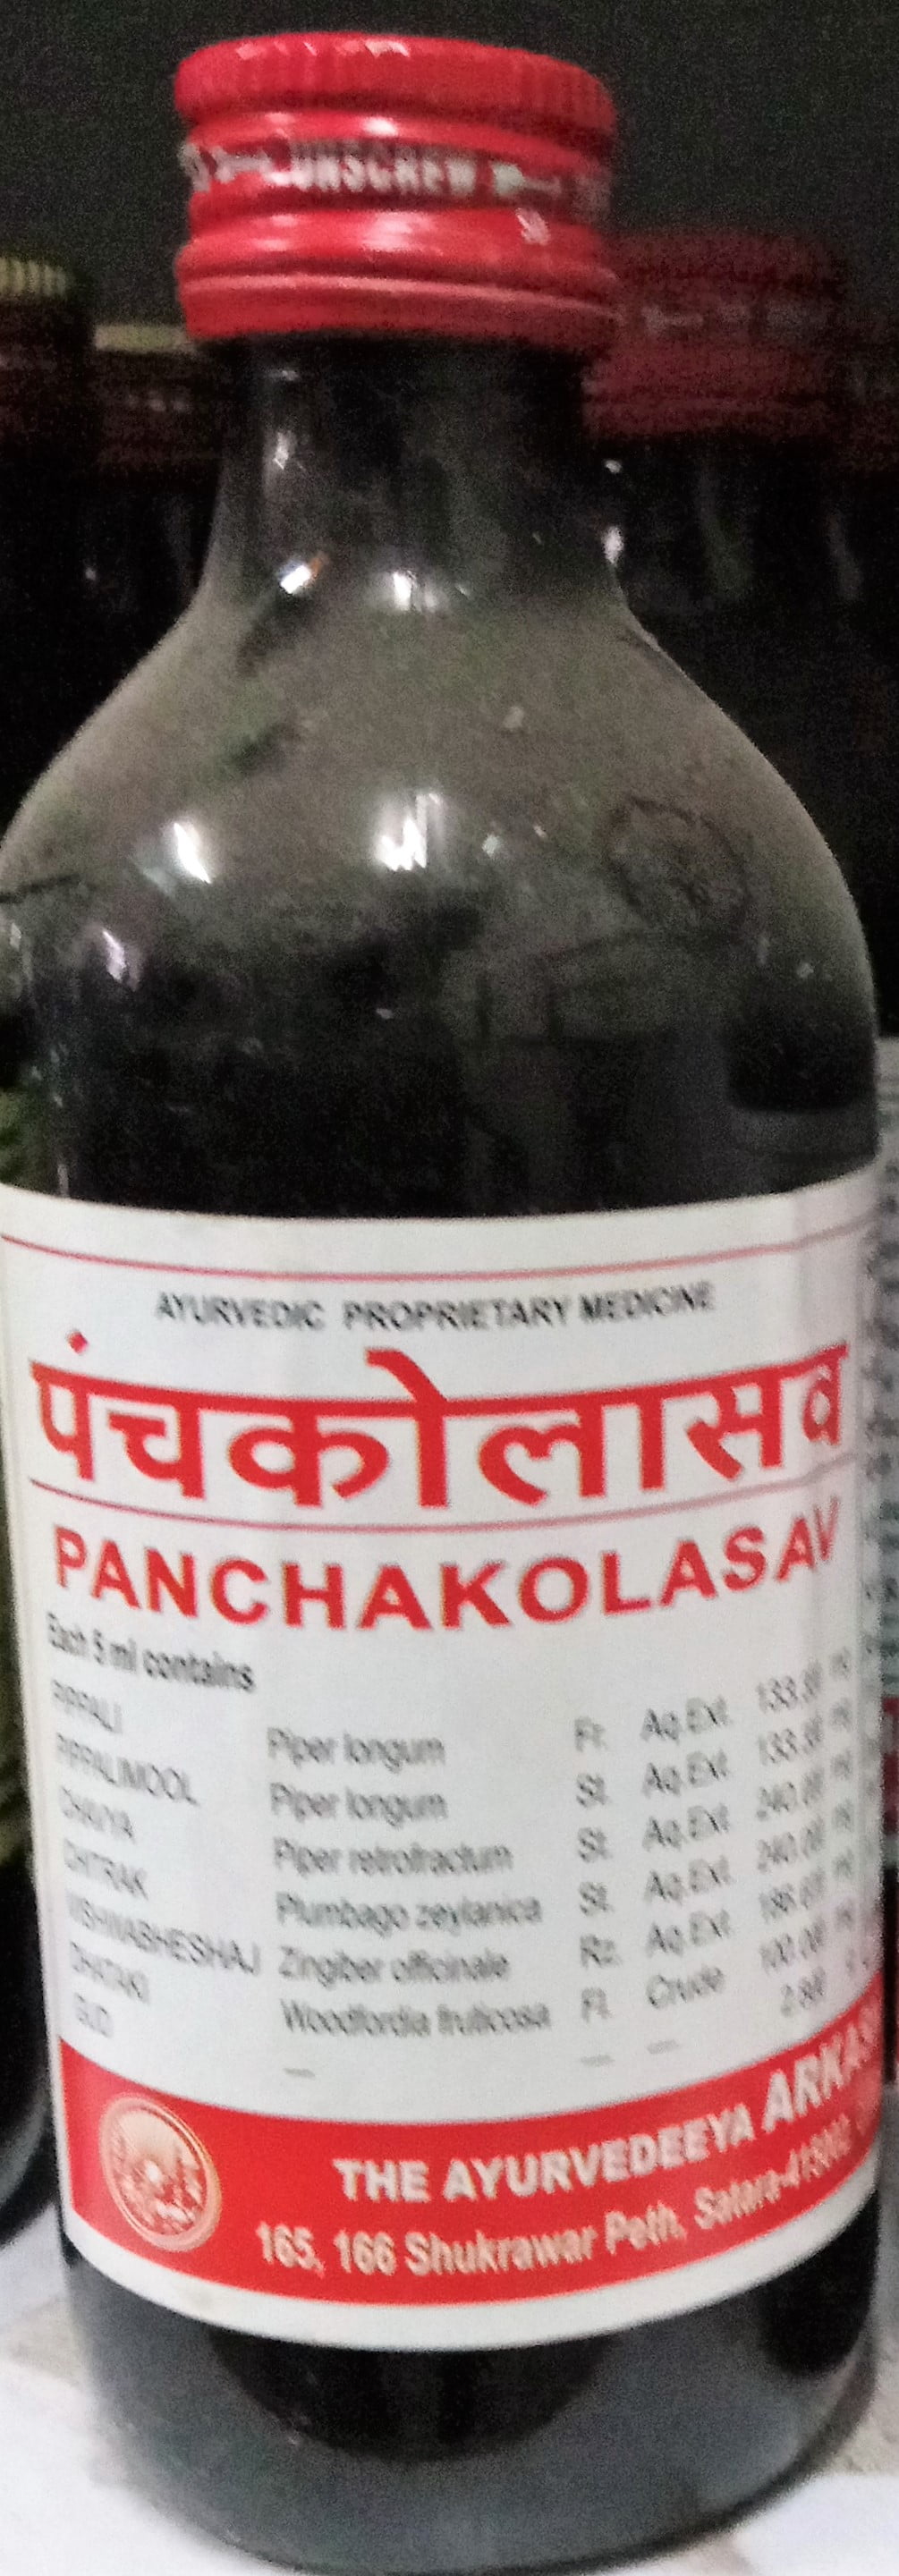 panchakolasav 450 ml The Ayurveda Arkashala